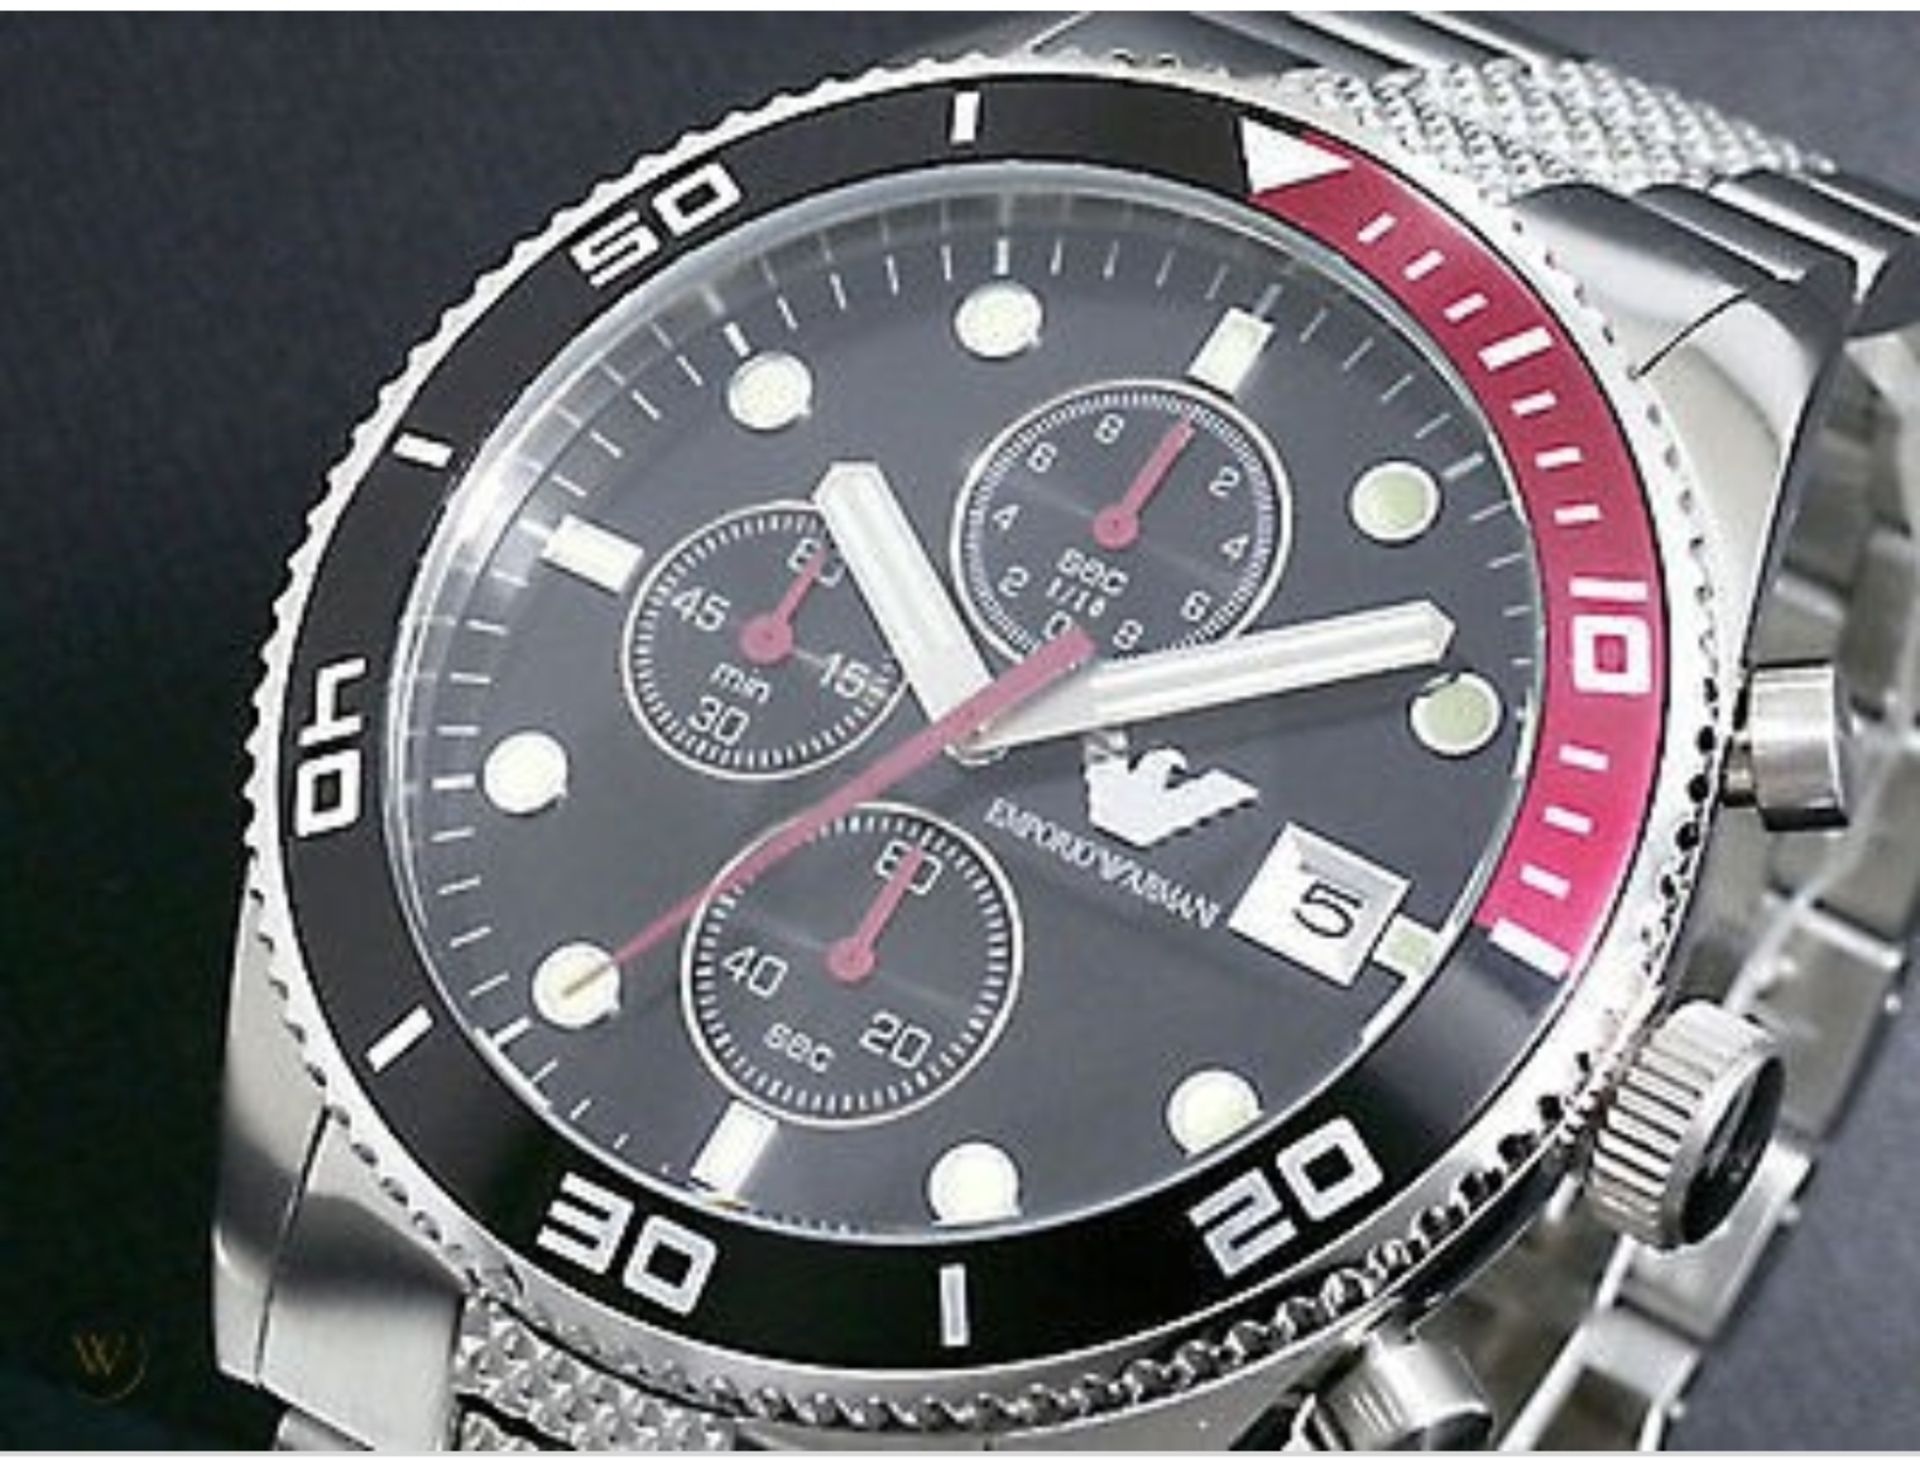 Emporio Armani AR5855 Men's Black Dial Silver Tone Bracelet Quartz Chronograph Watch - Image 5 of 11